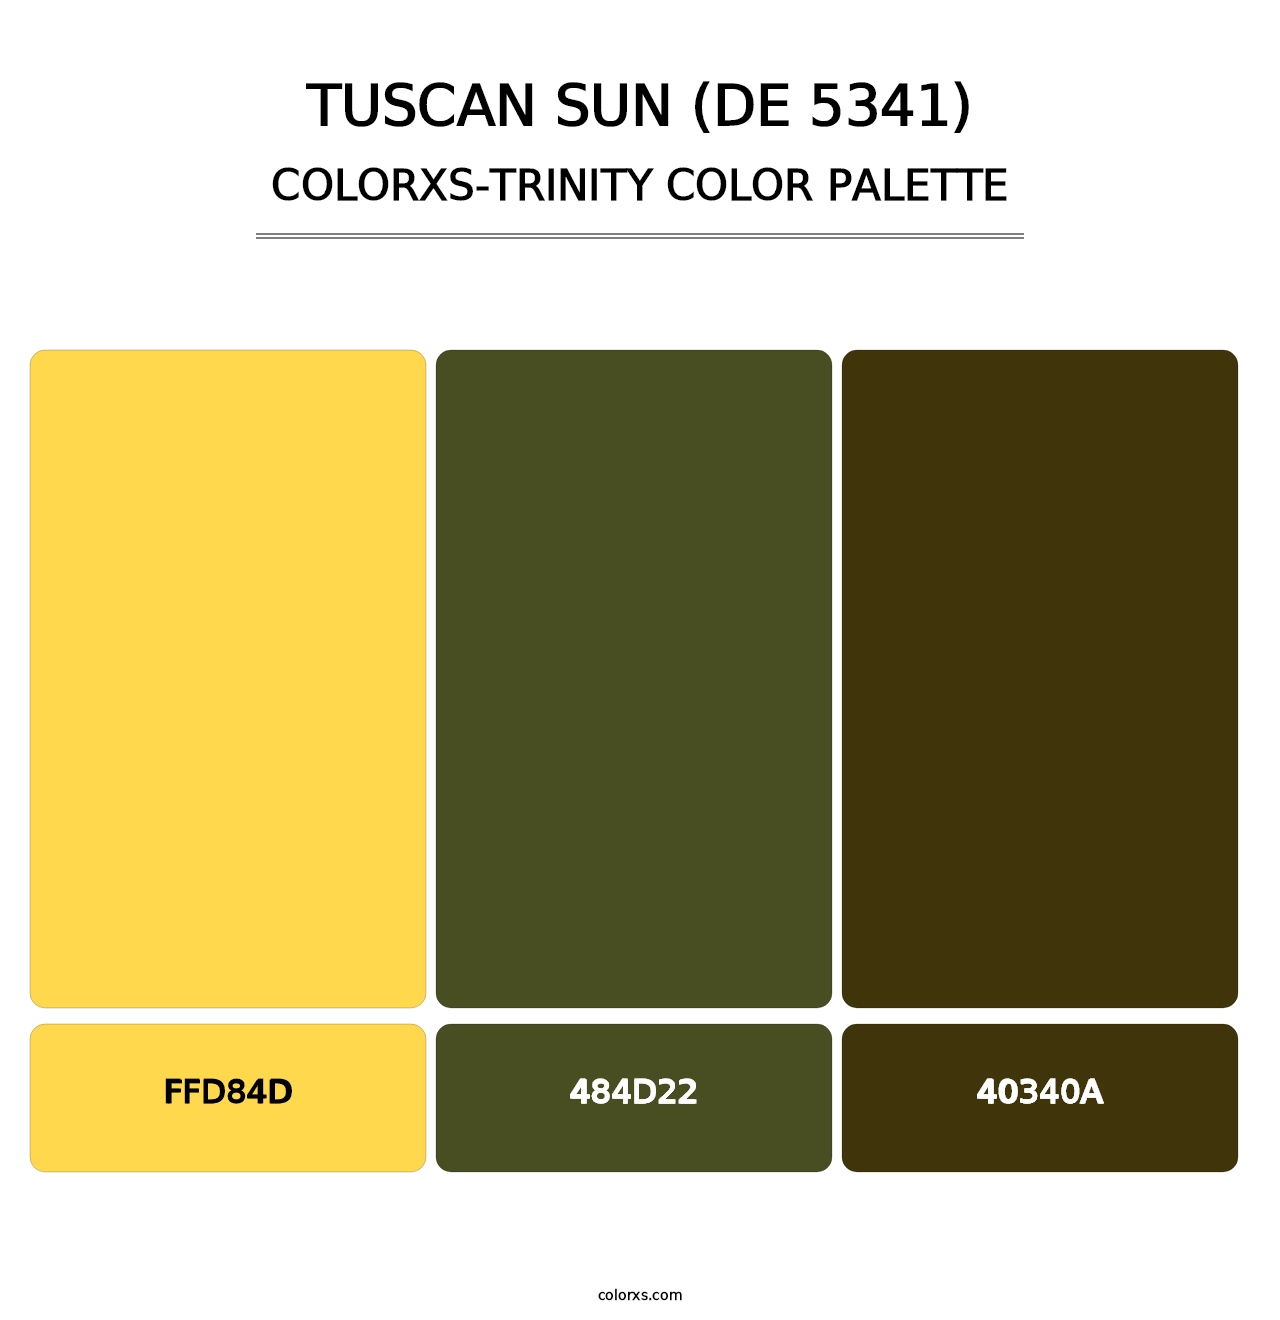 Tuscan Sun (DE 5341) - Colorxs Trinity Palette